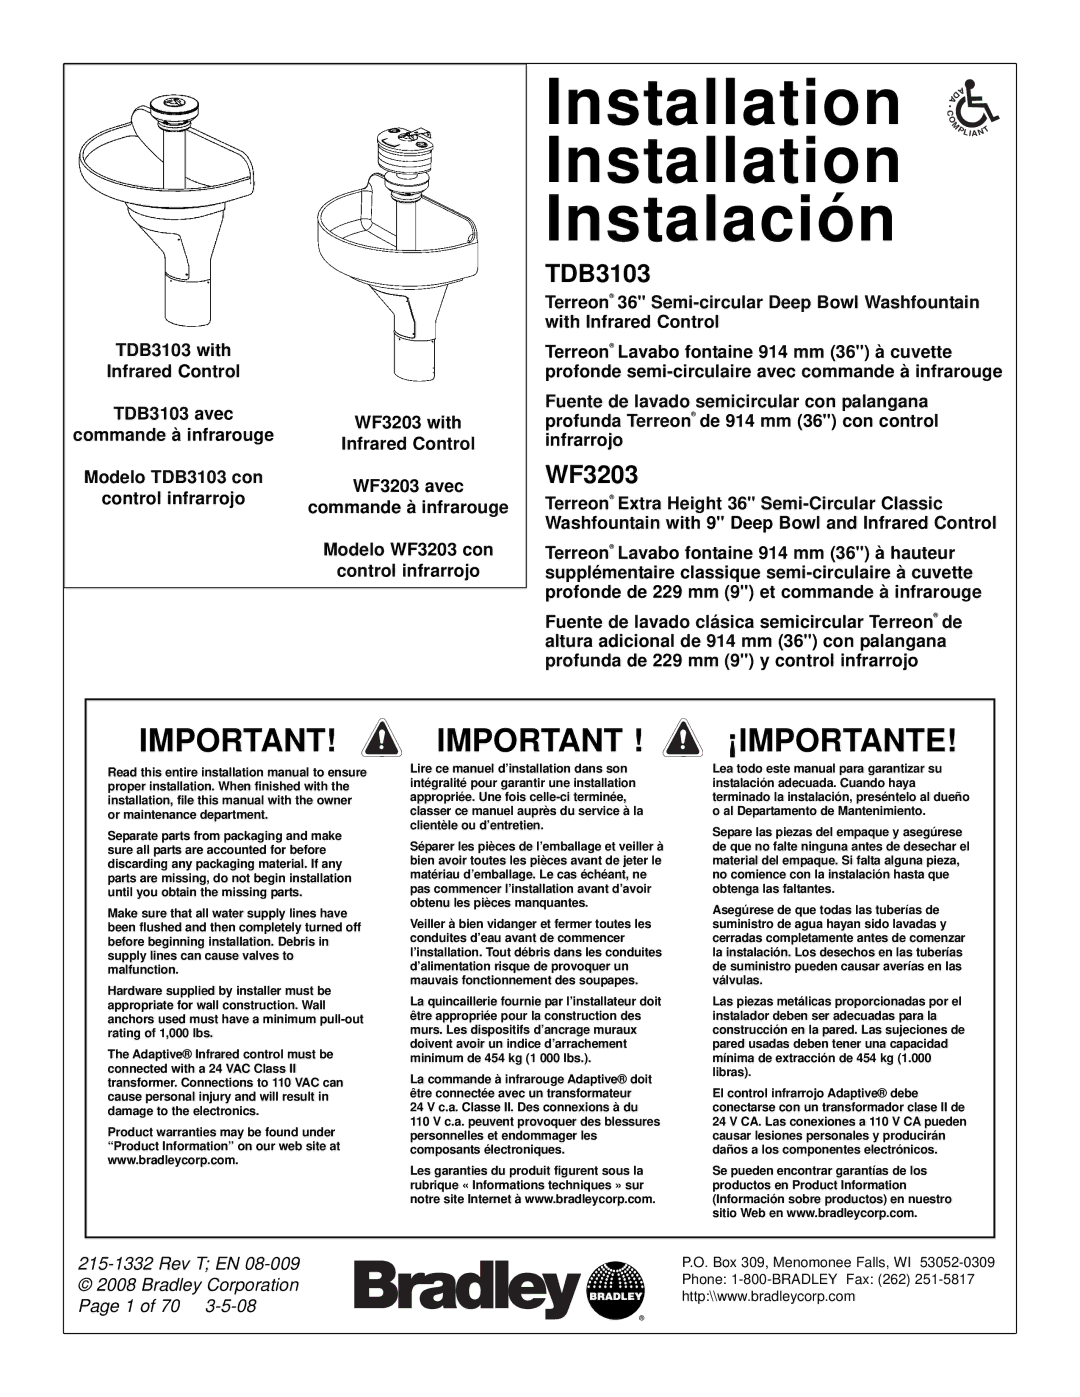 Bradley Brand Furniture WF3203, TBD3103 installation manual Installation Instalación, Commande à infrarouge 